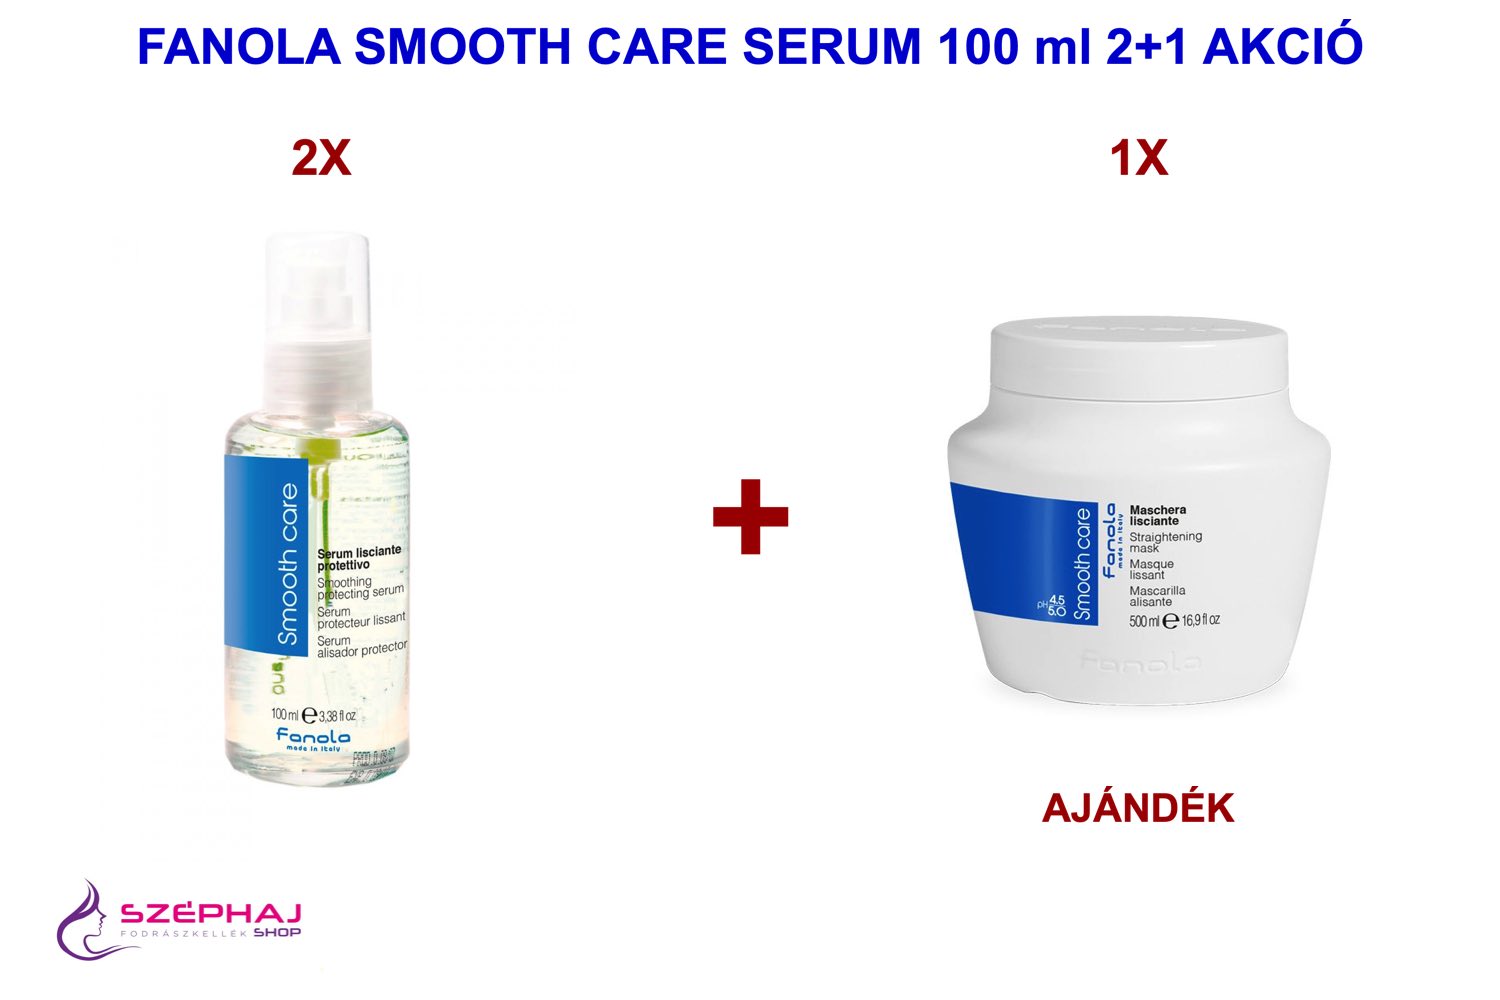 FANOLA Smooth Care Serum 100 ml 2+1 AKCIÓ